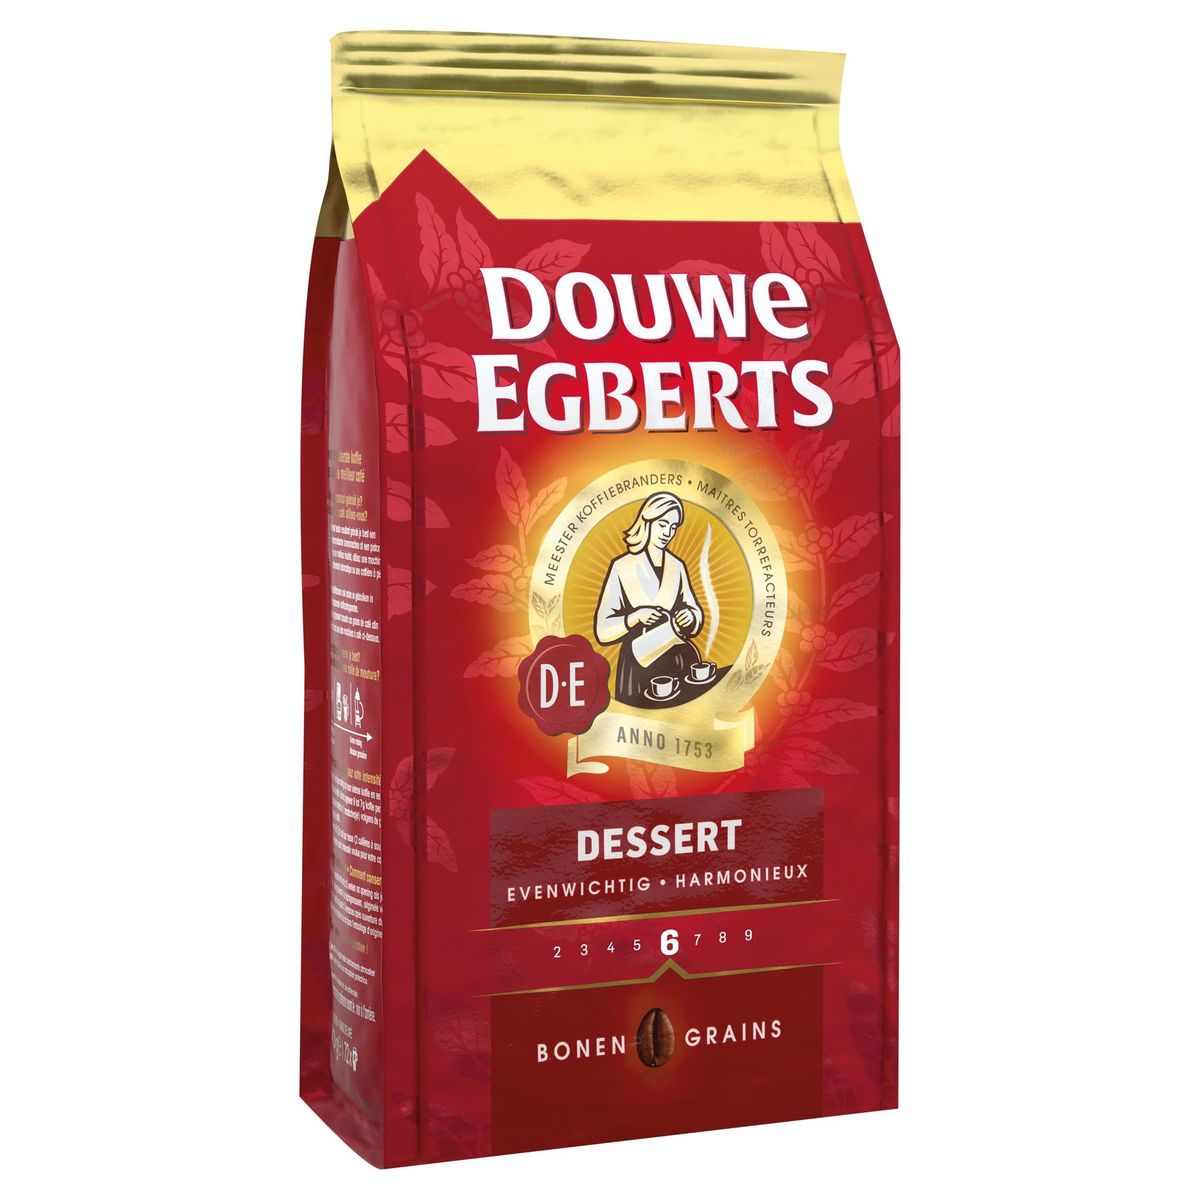 DOUWE EGBERTS Koffie Bonen Dessert 500 g